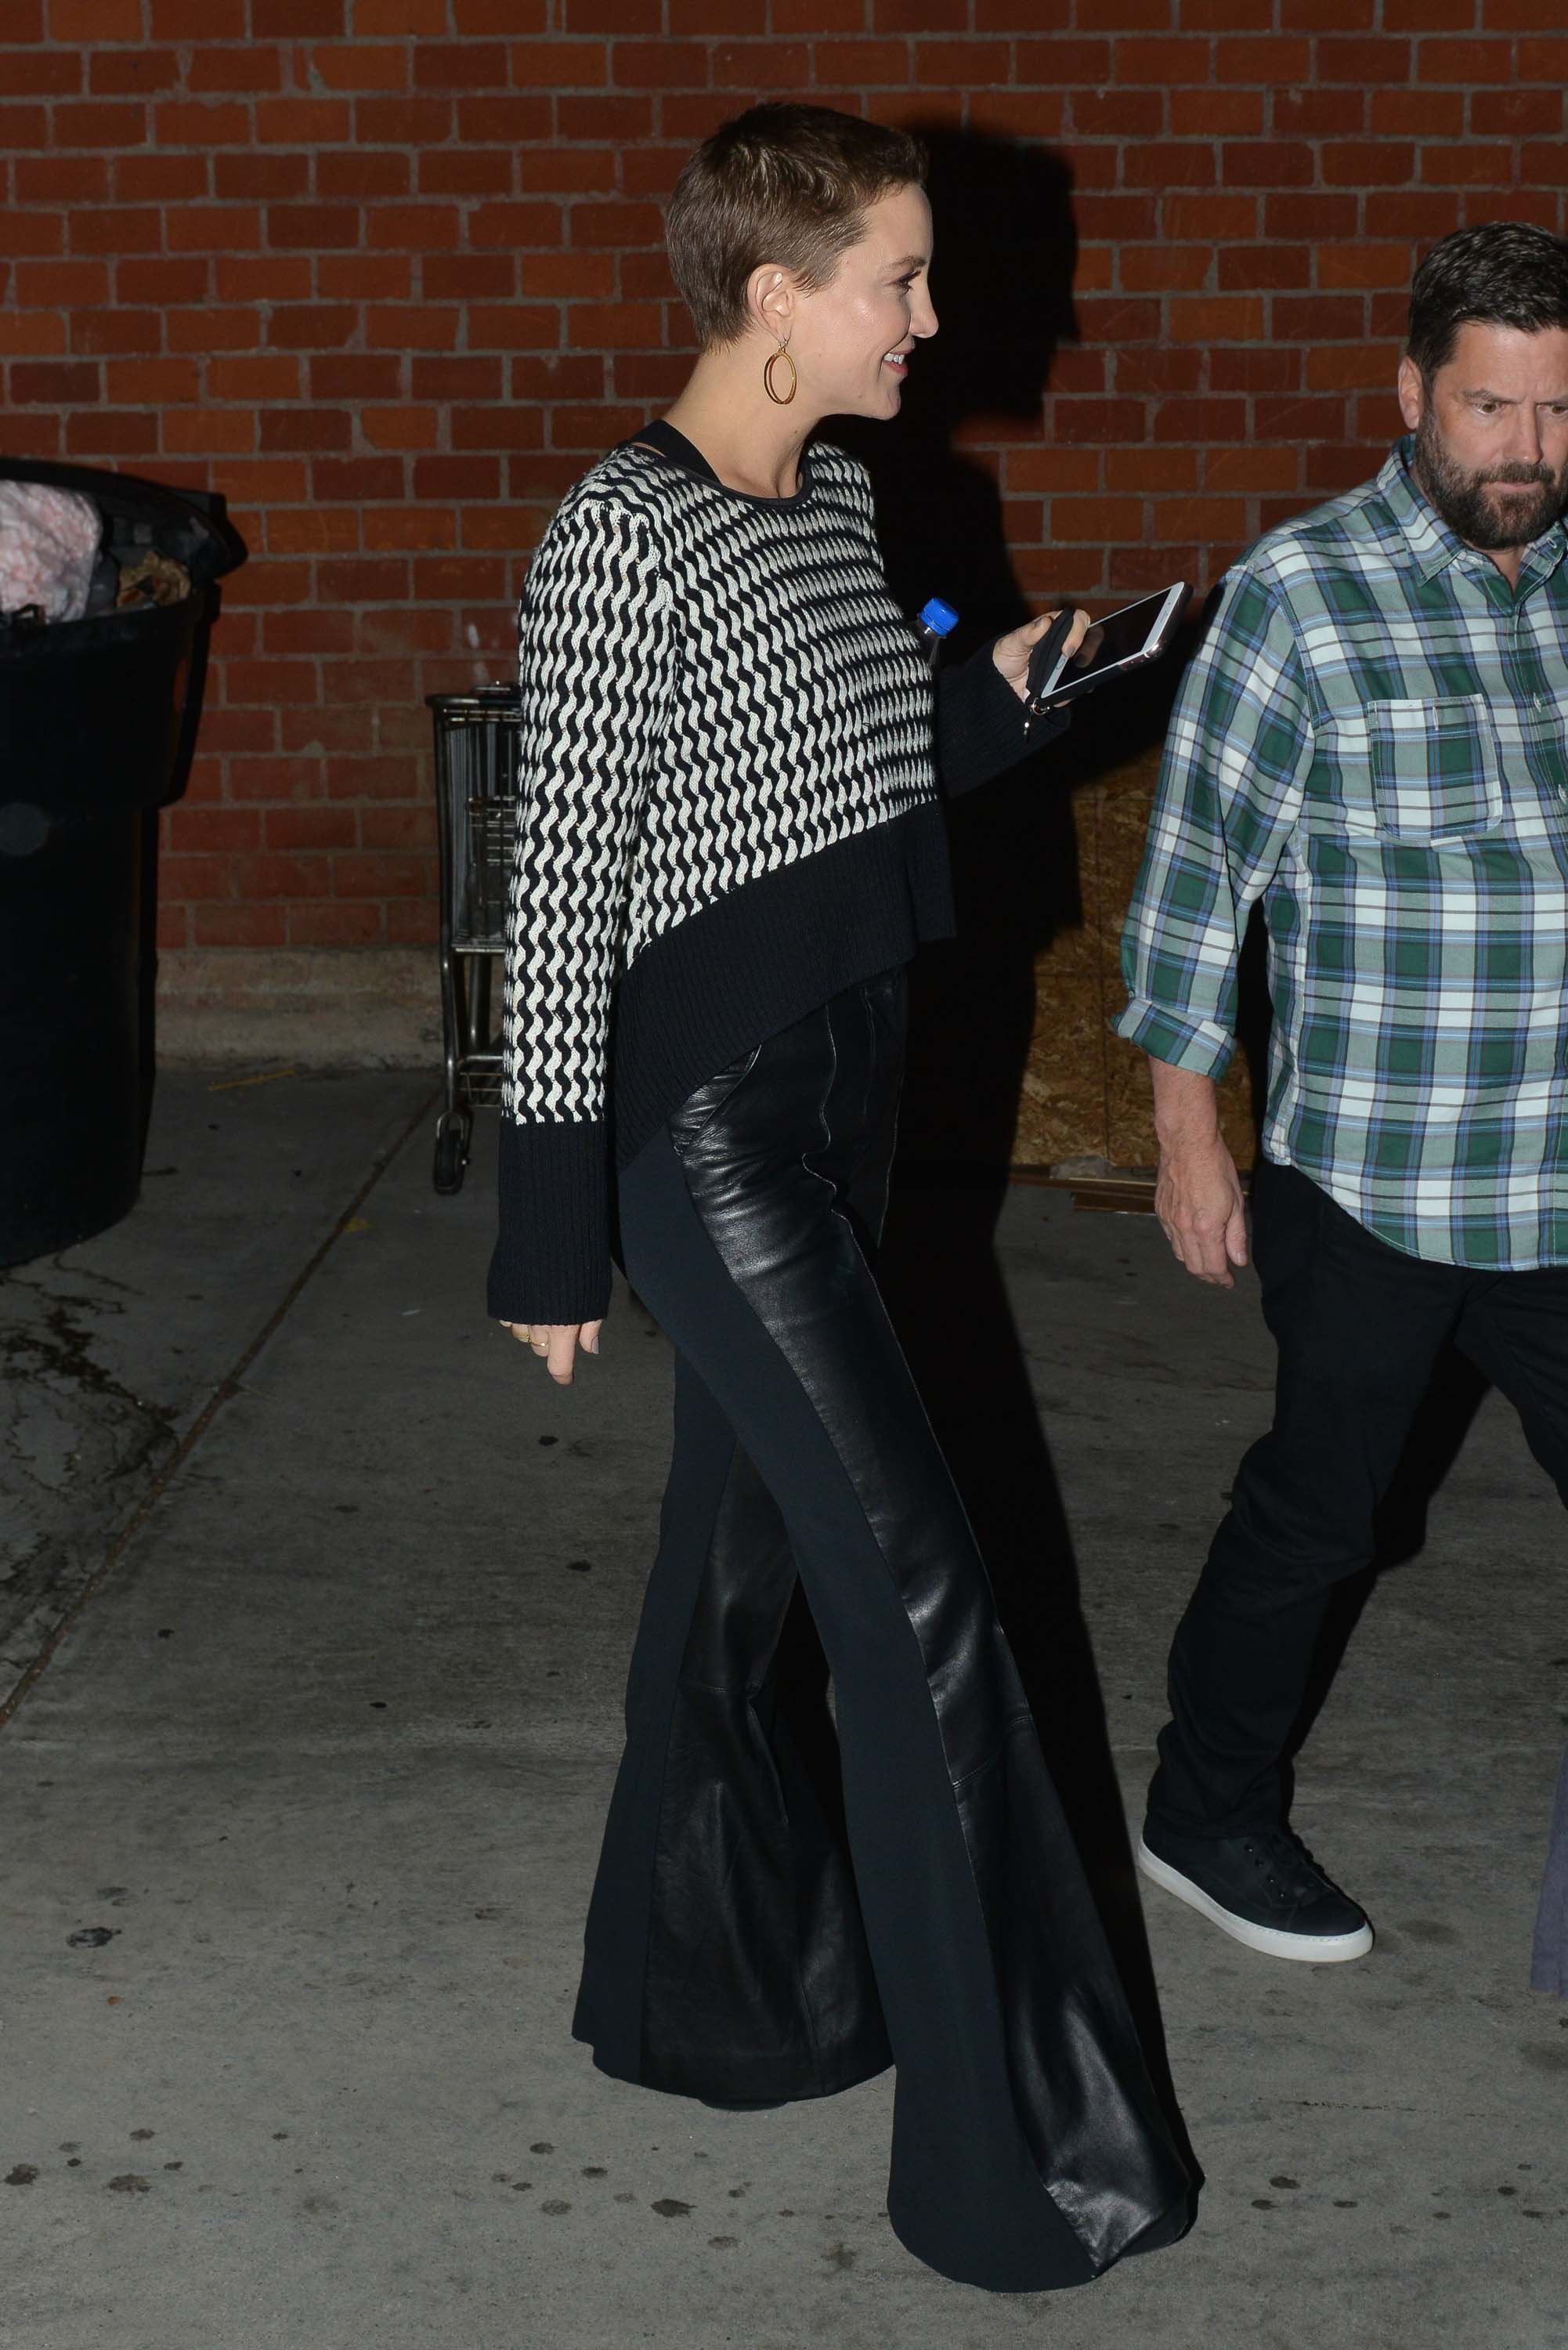 Kate Hudson attends Aero Theater in Santa Monica